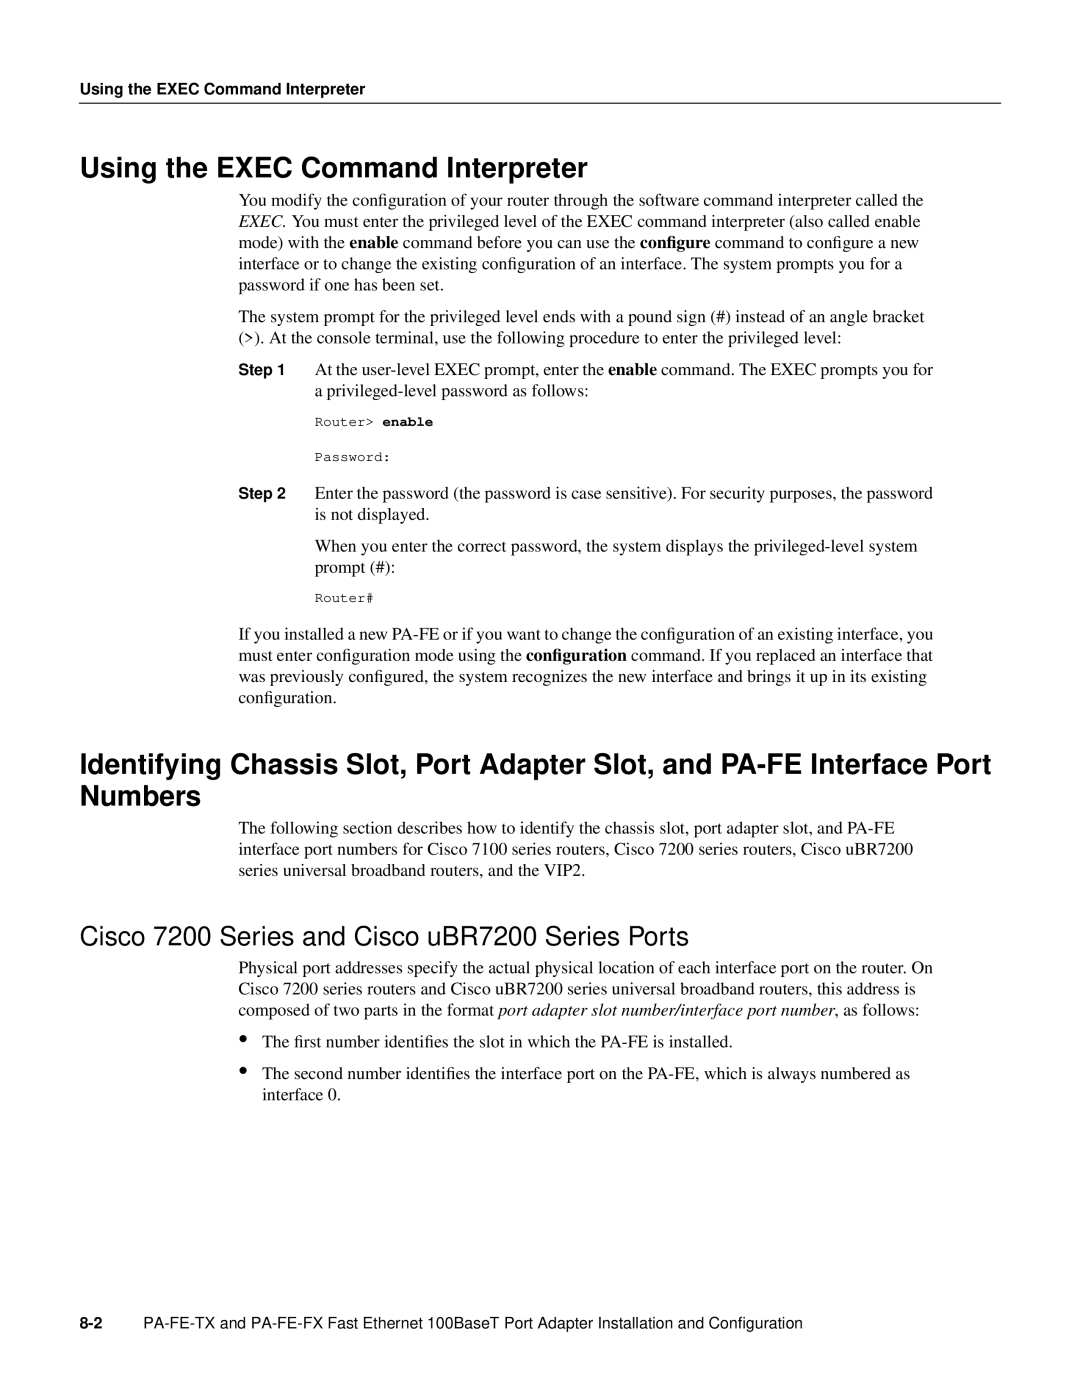 Cisco Systems PA-FE-TX, PA-FE-FX manual Using the EXEC Command Interpreter, Cisco 7200 Series and Cisco uBR7200 Series Ports 